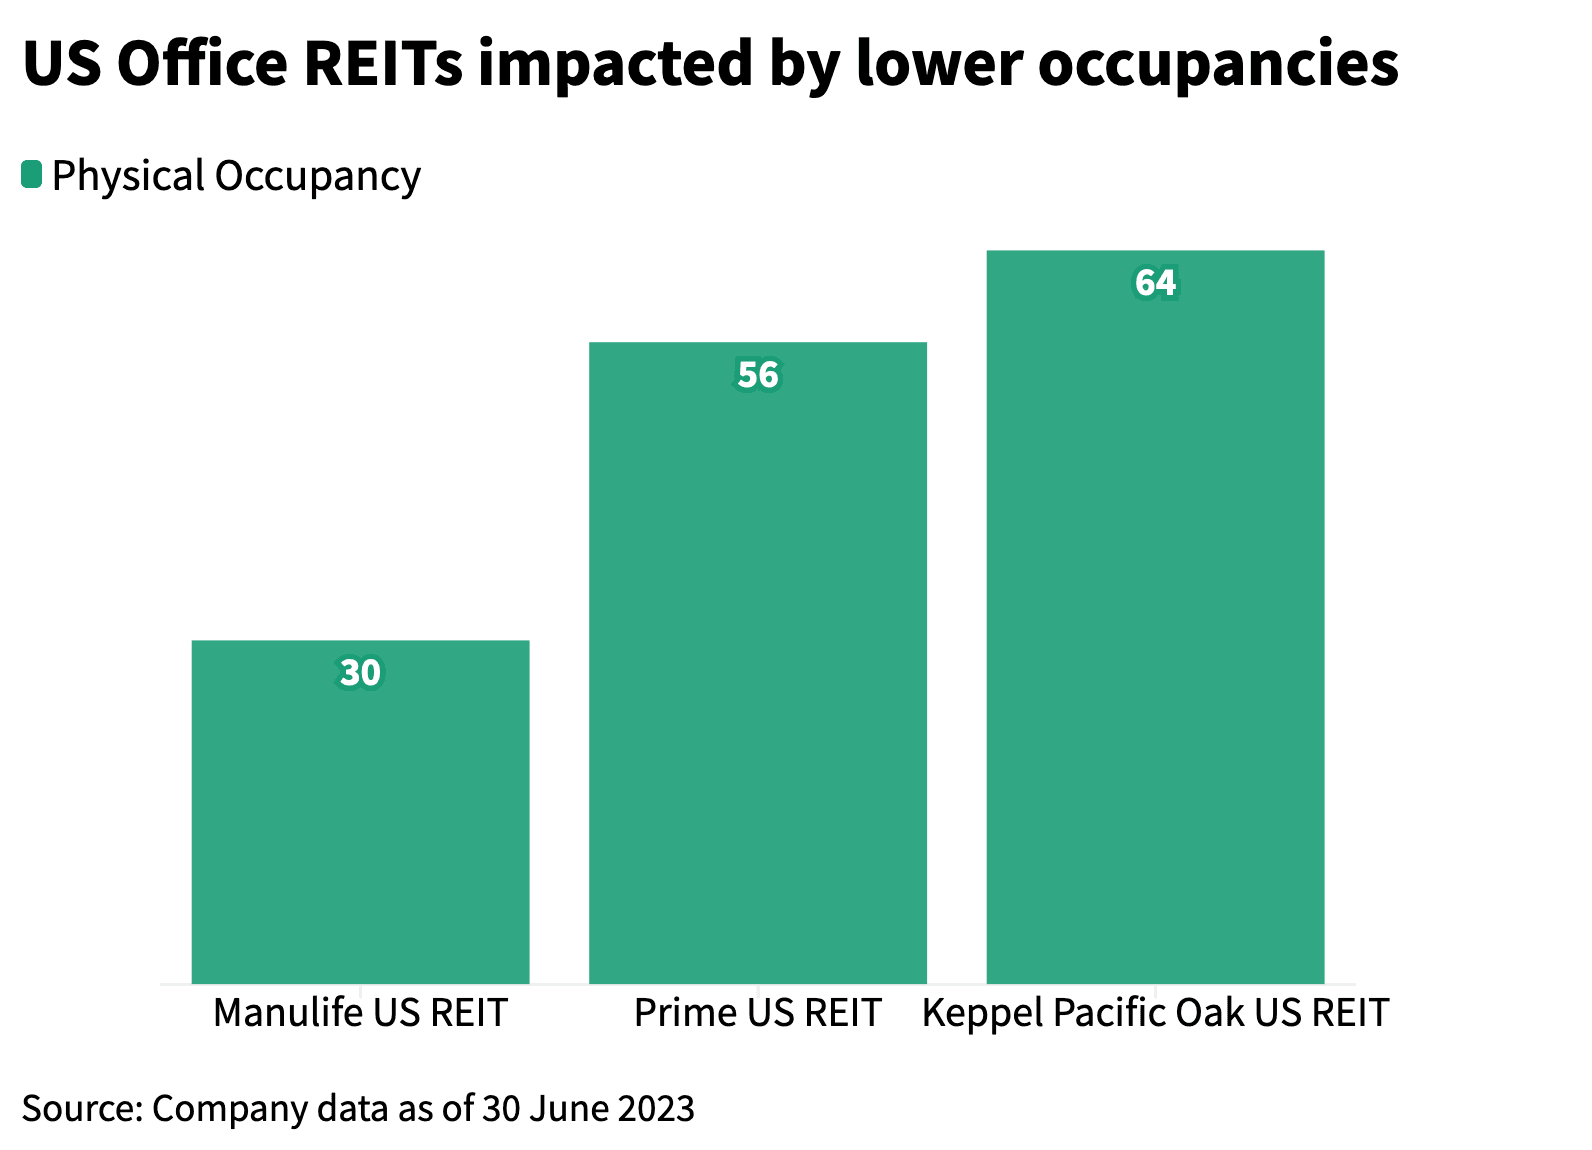 US Office REIT occupancy